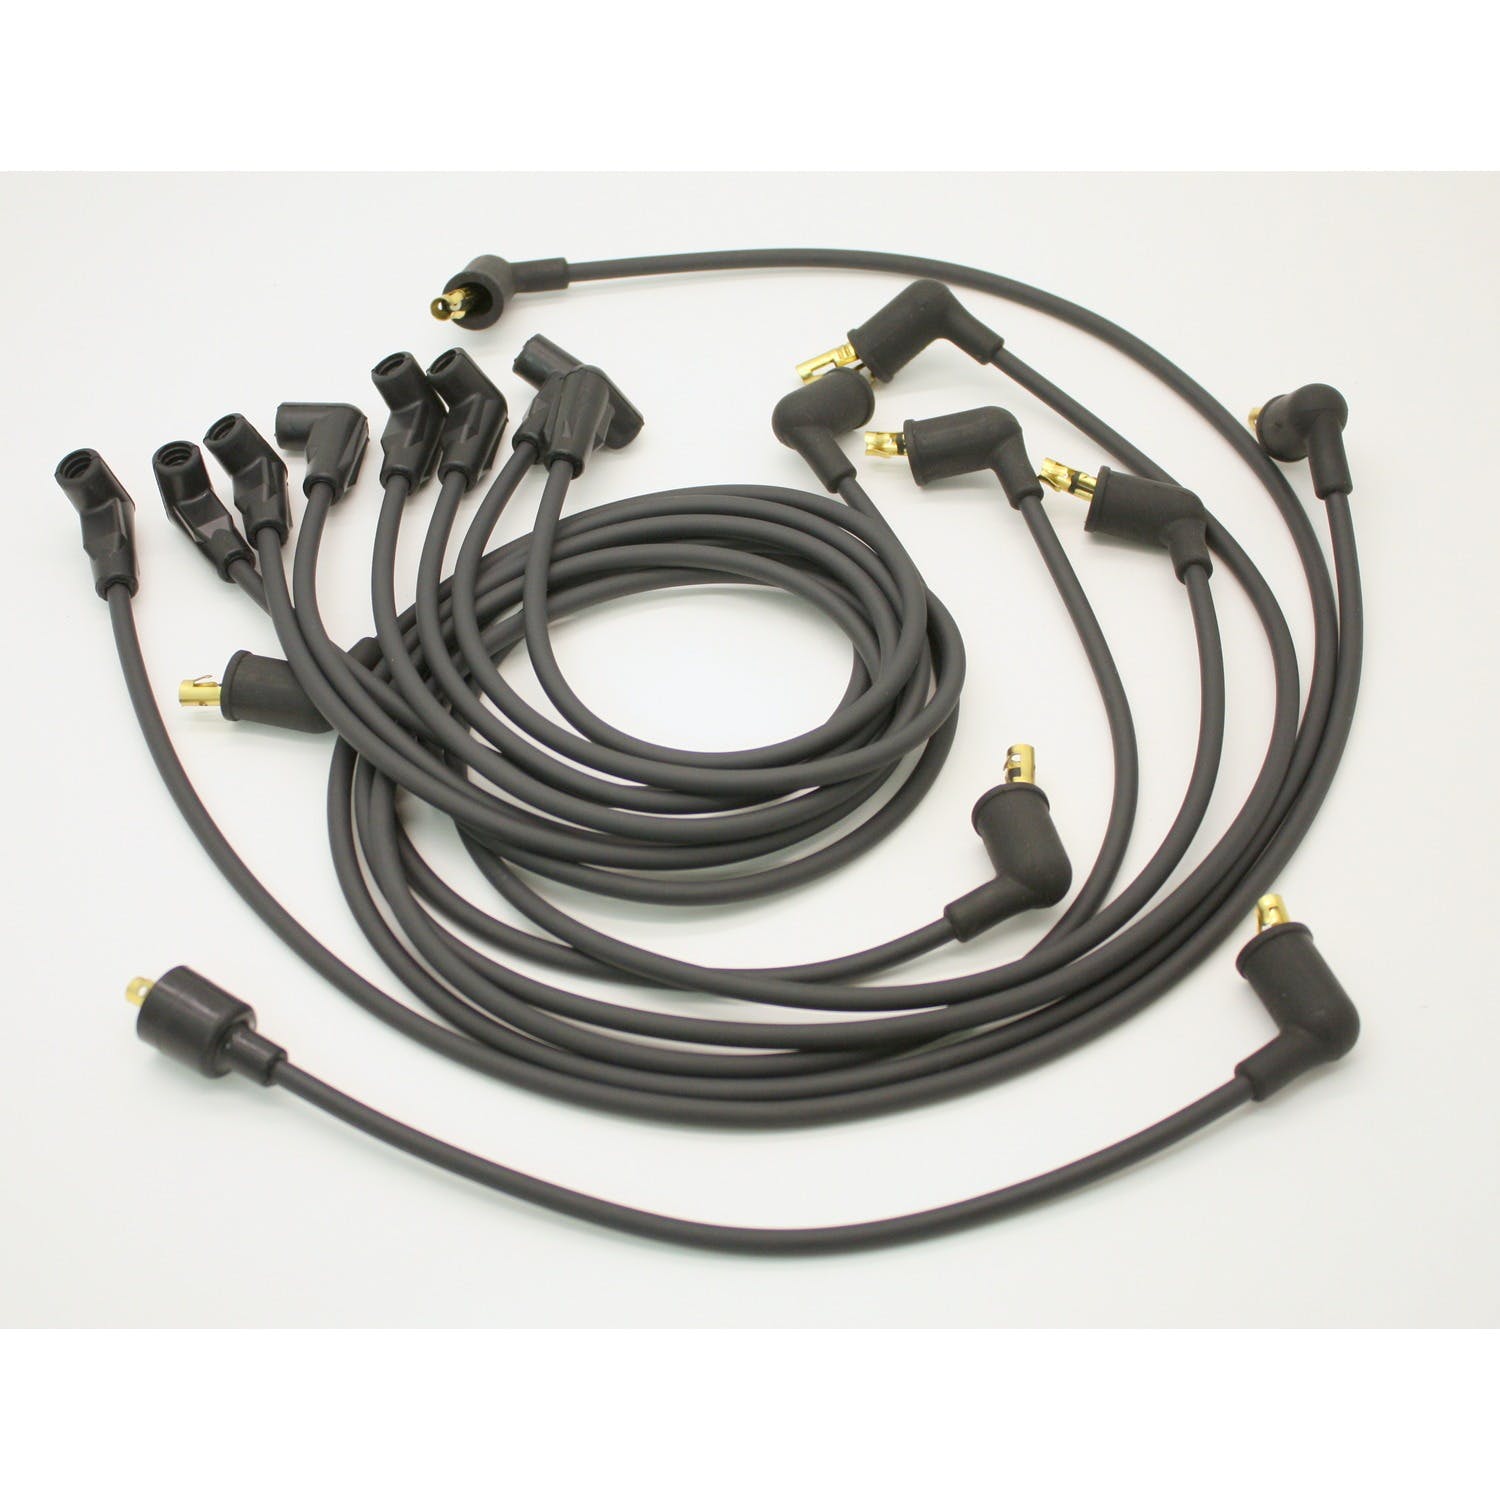 PerTronix 708107 Spark Plug Wire Set